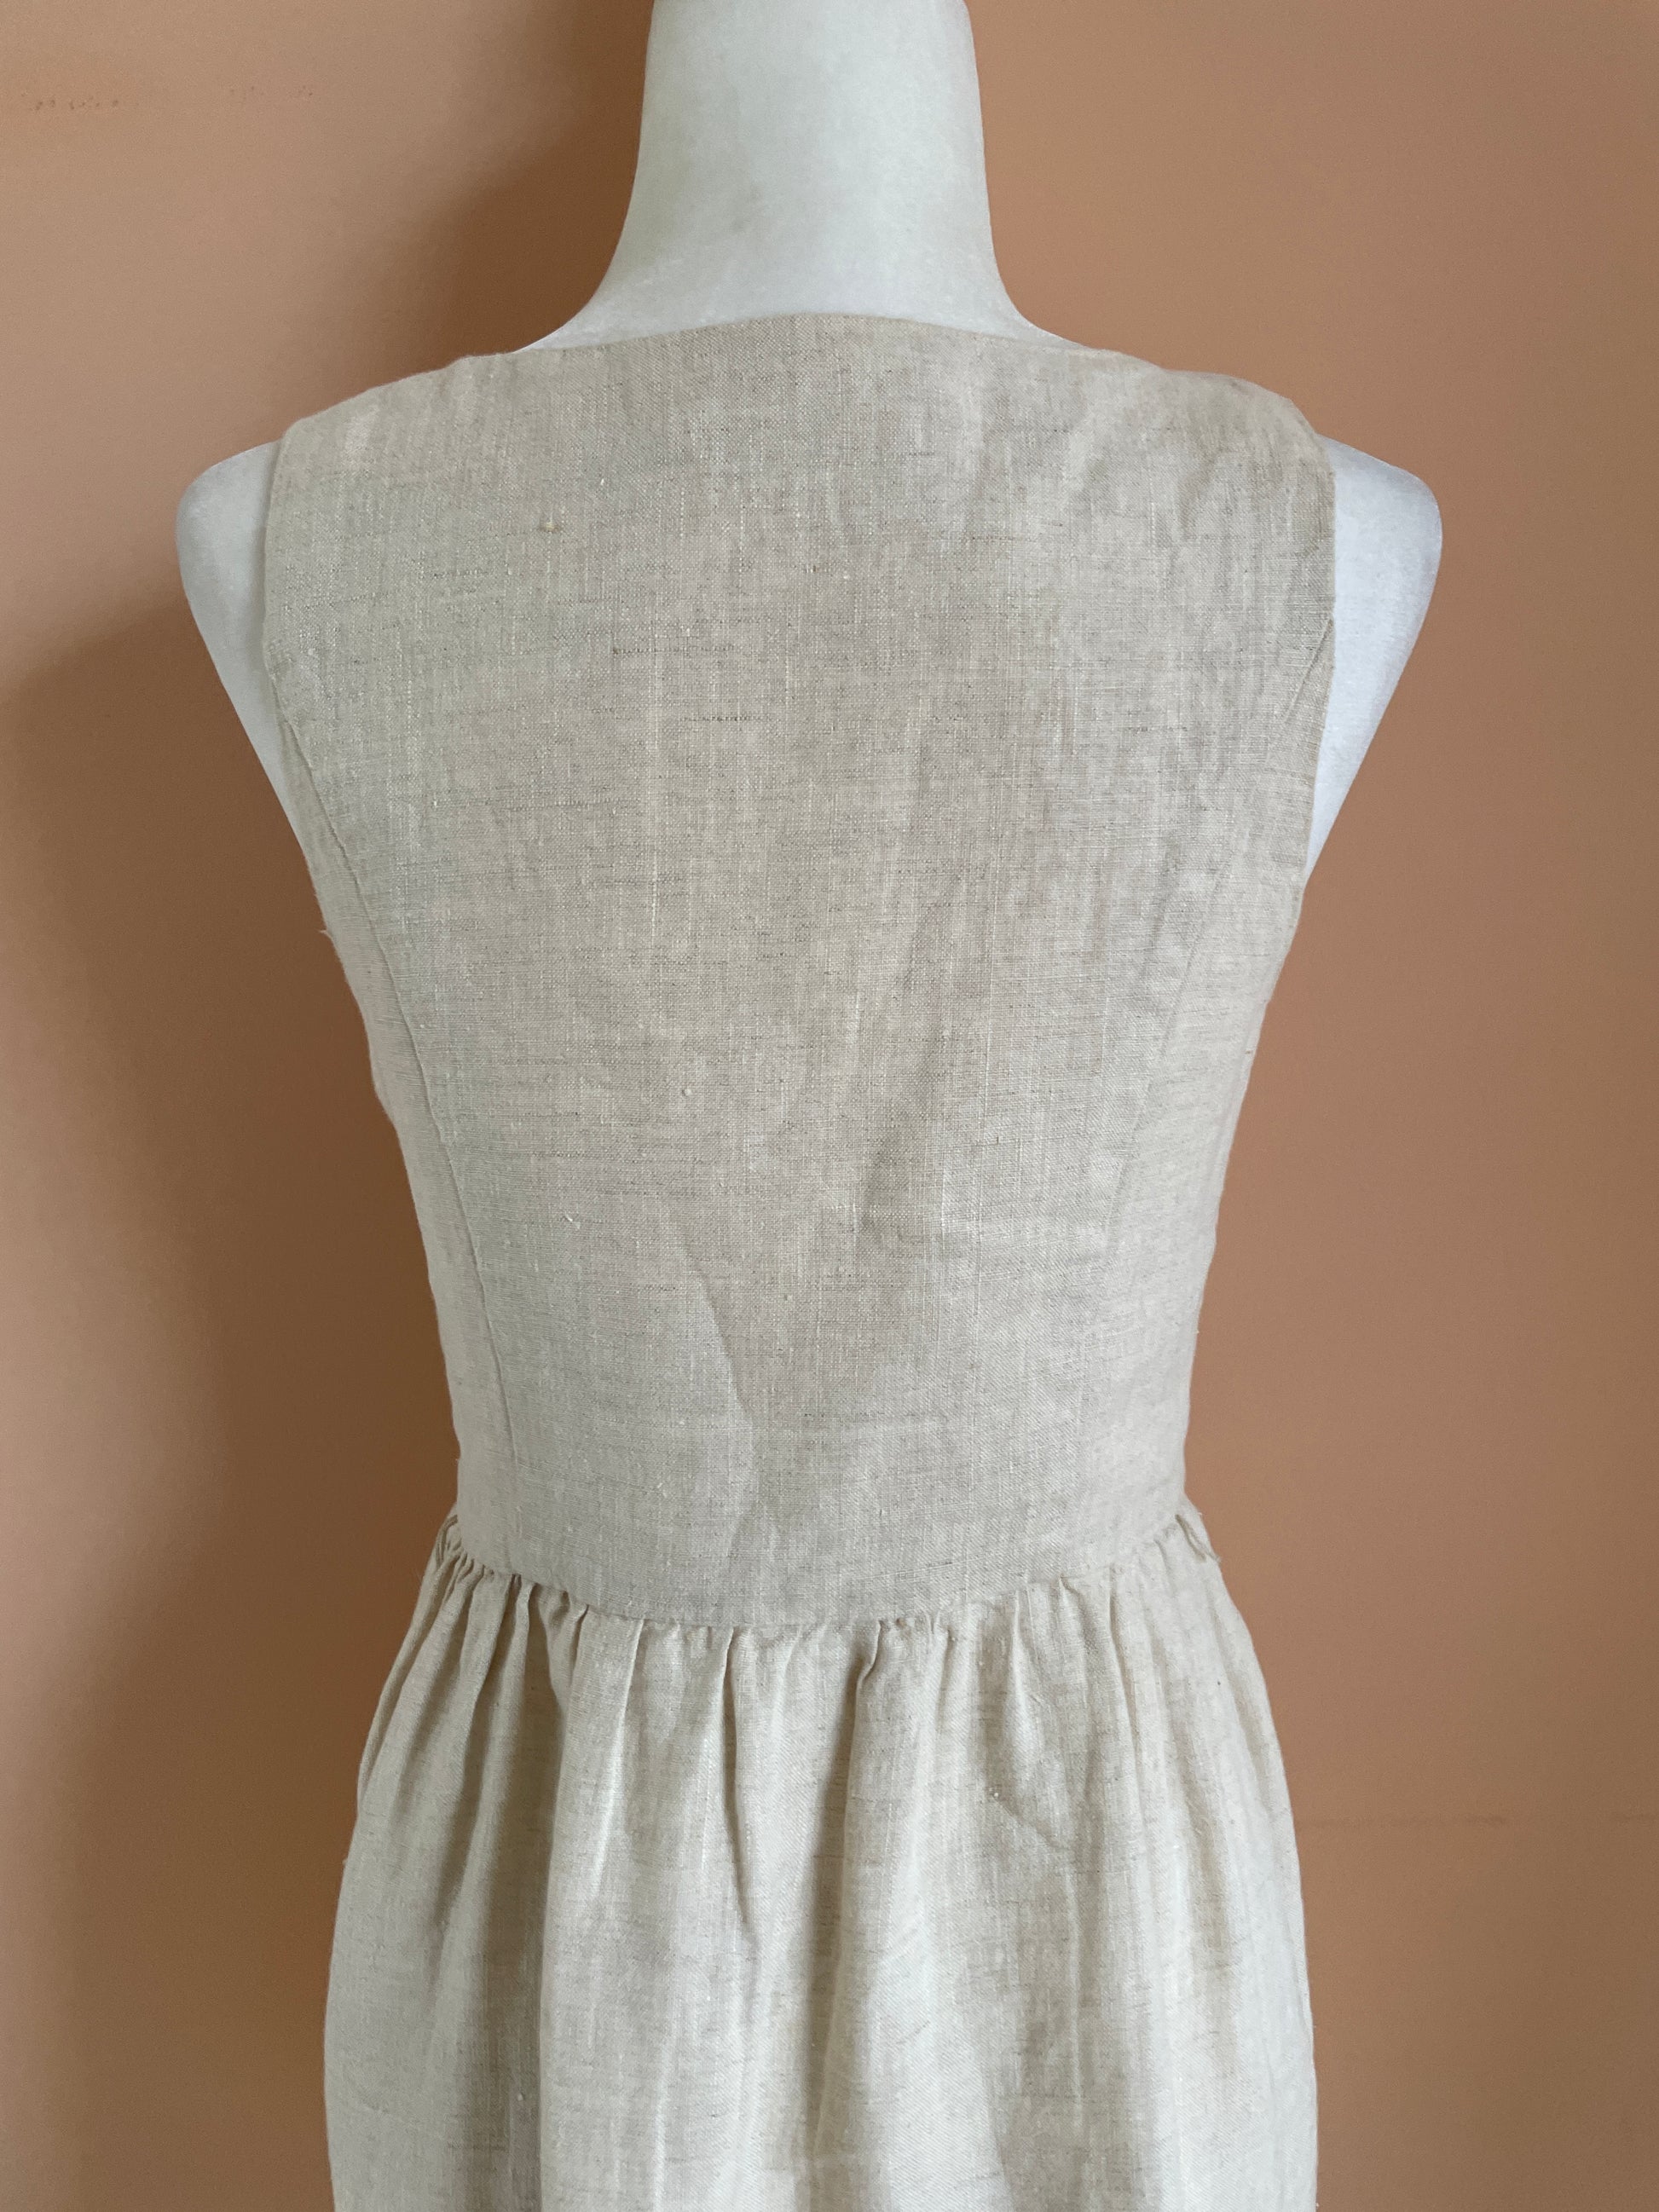  90s Vintage Beige Linen Sleeveless Classic Day Dress S